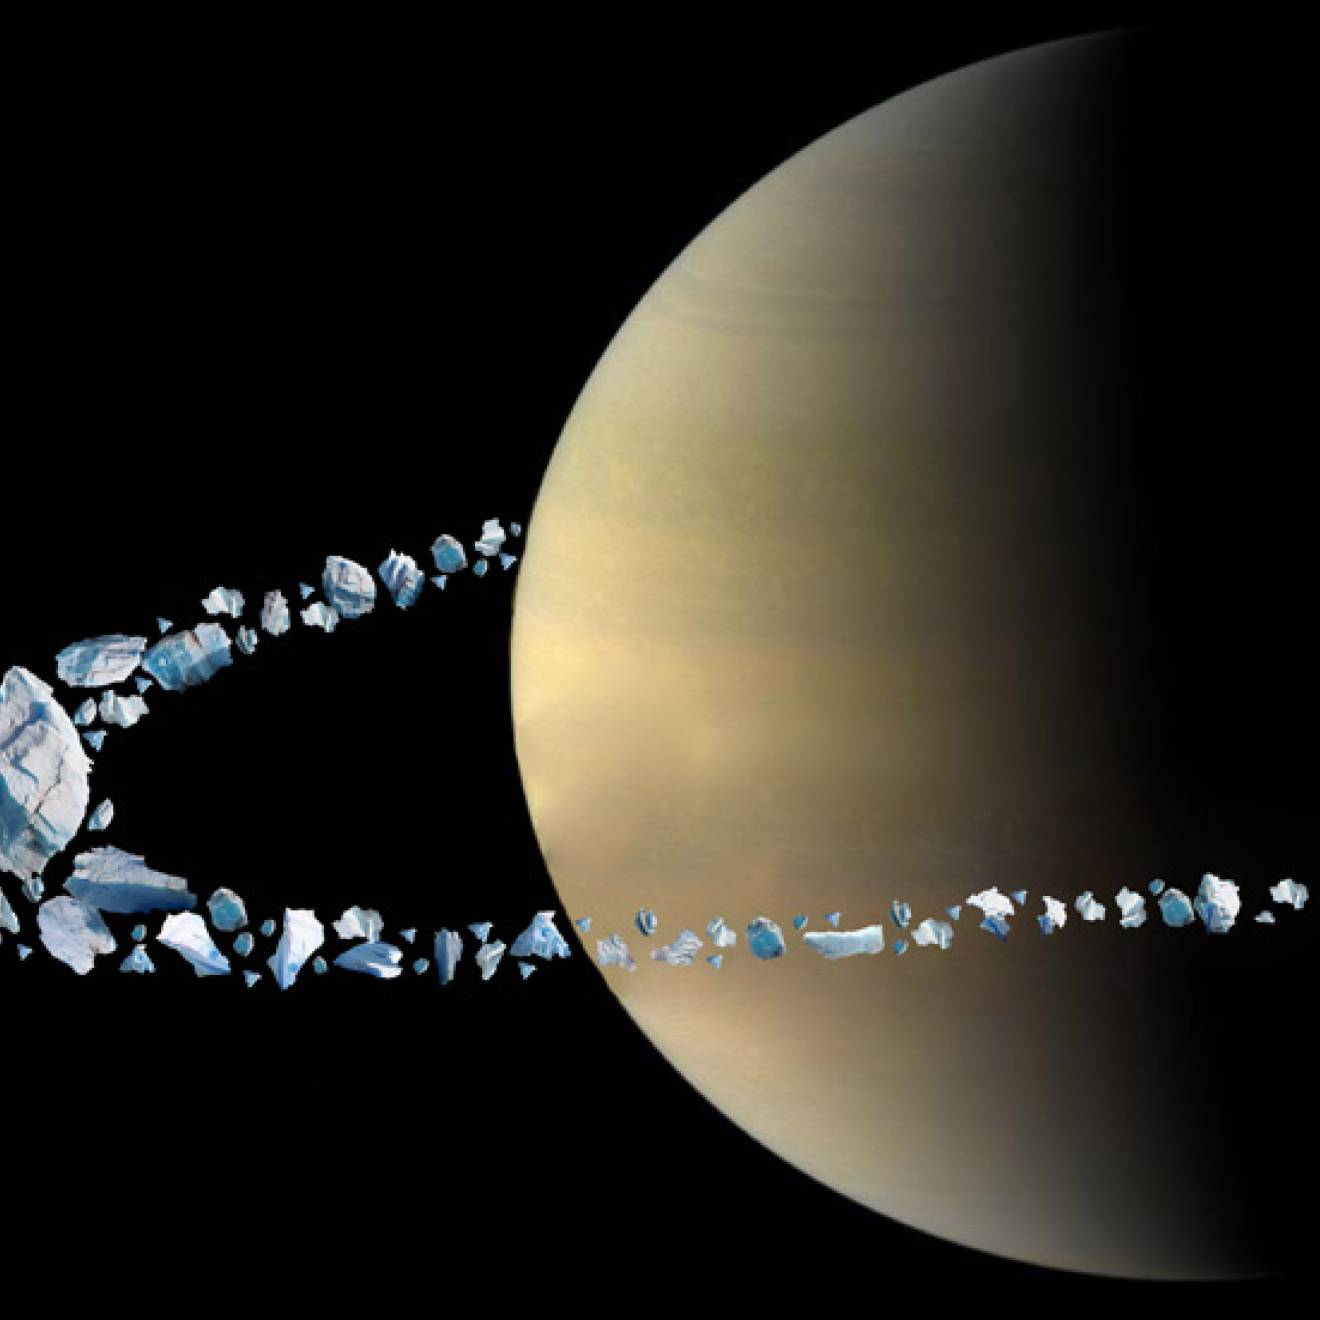 Artistic rendering of the moon Chrysalis disintegrating in Saturn’s intense gravity field.